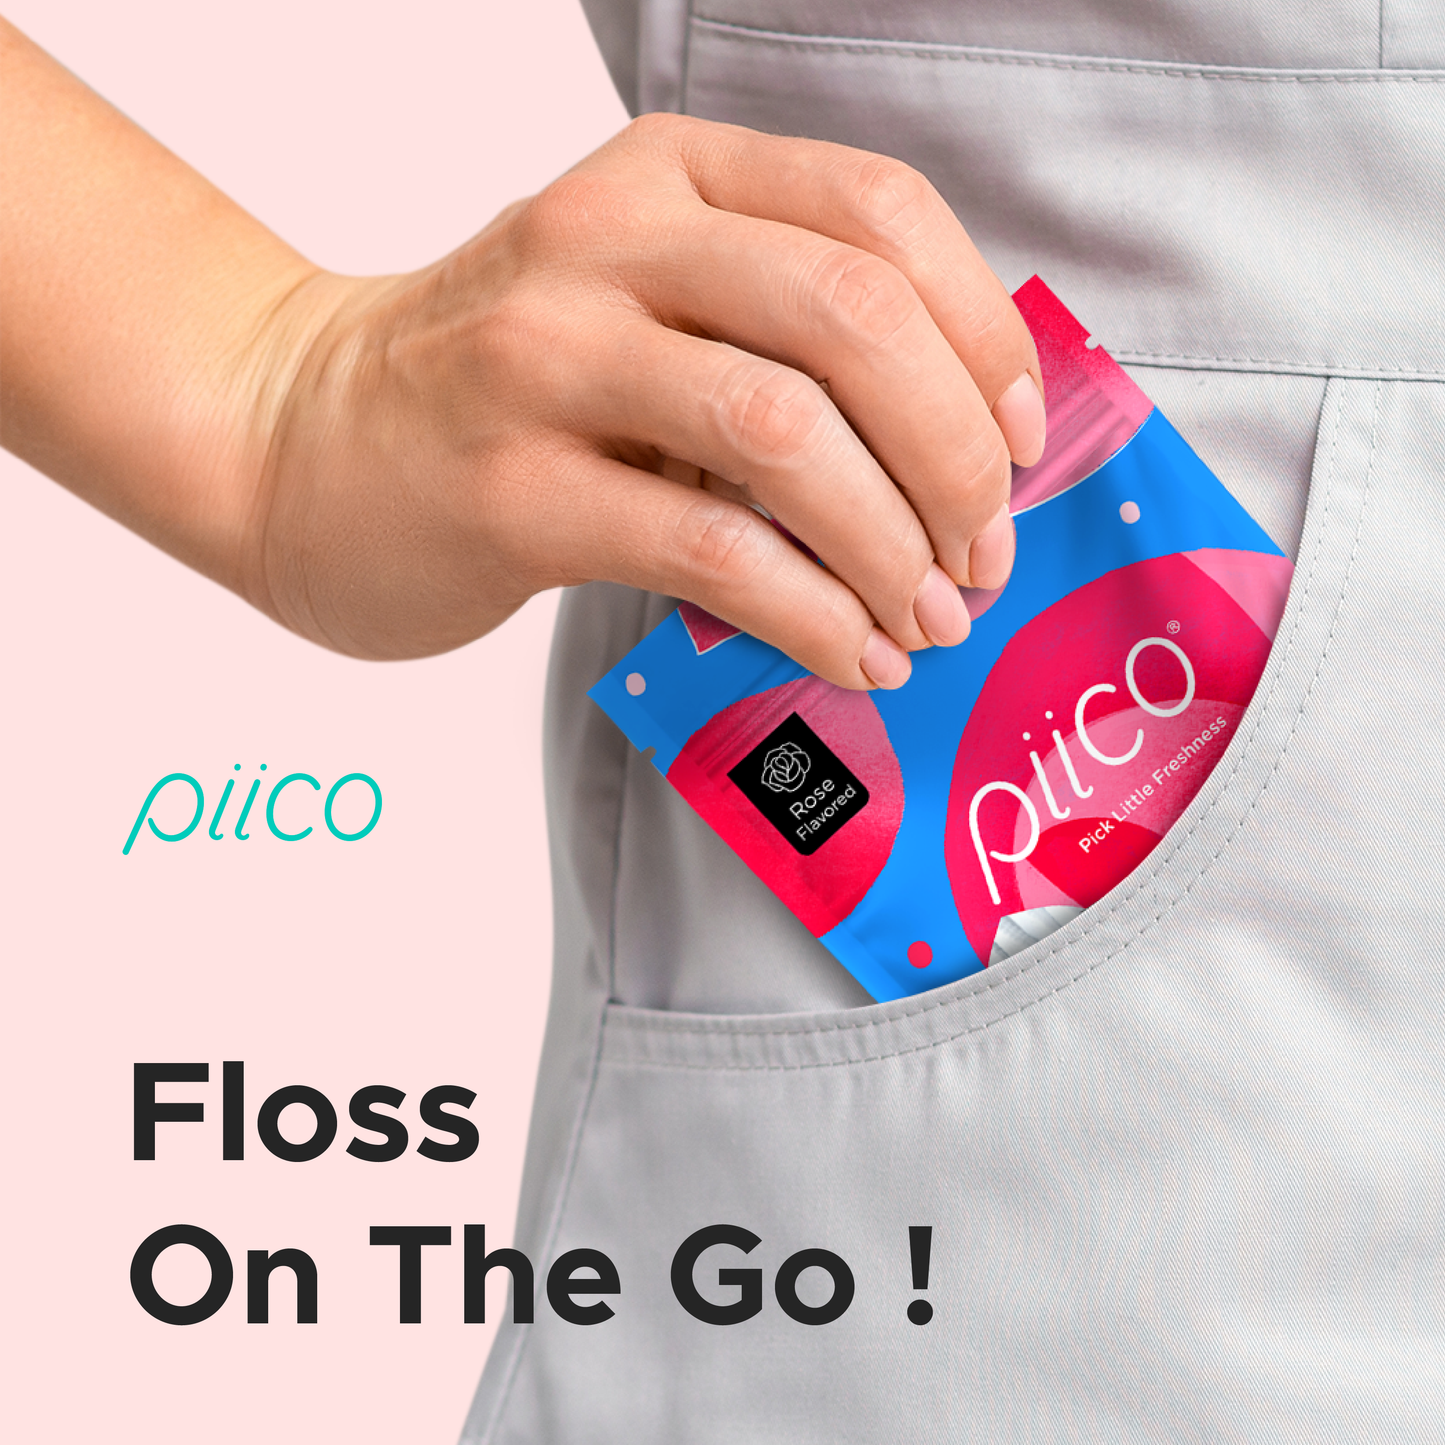 Piico Rose Flavored Dental Floss Picks (100 Count)